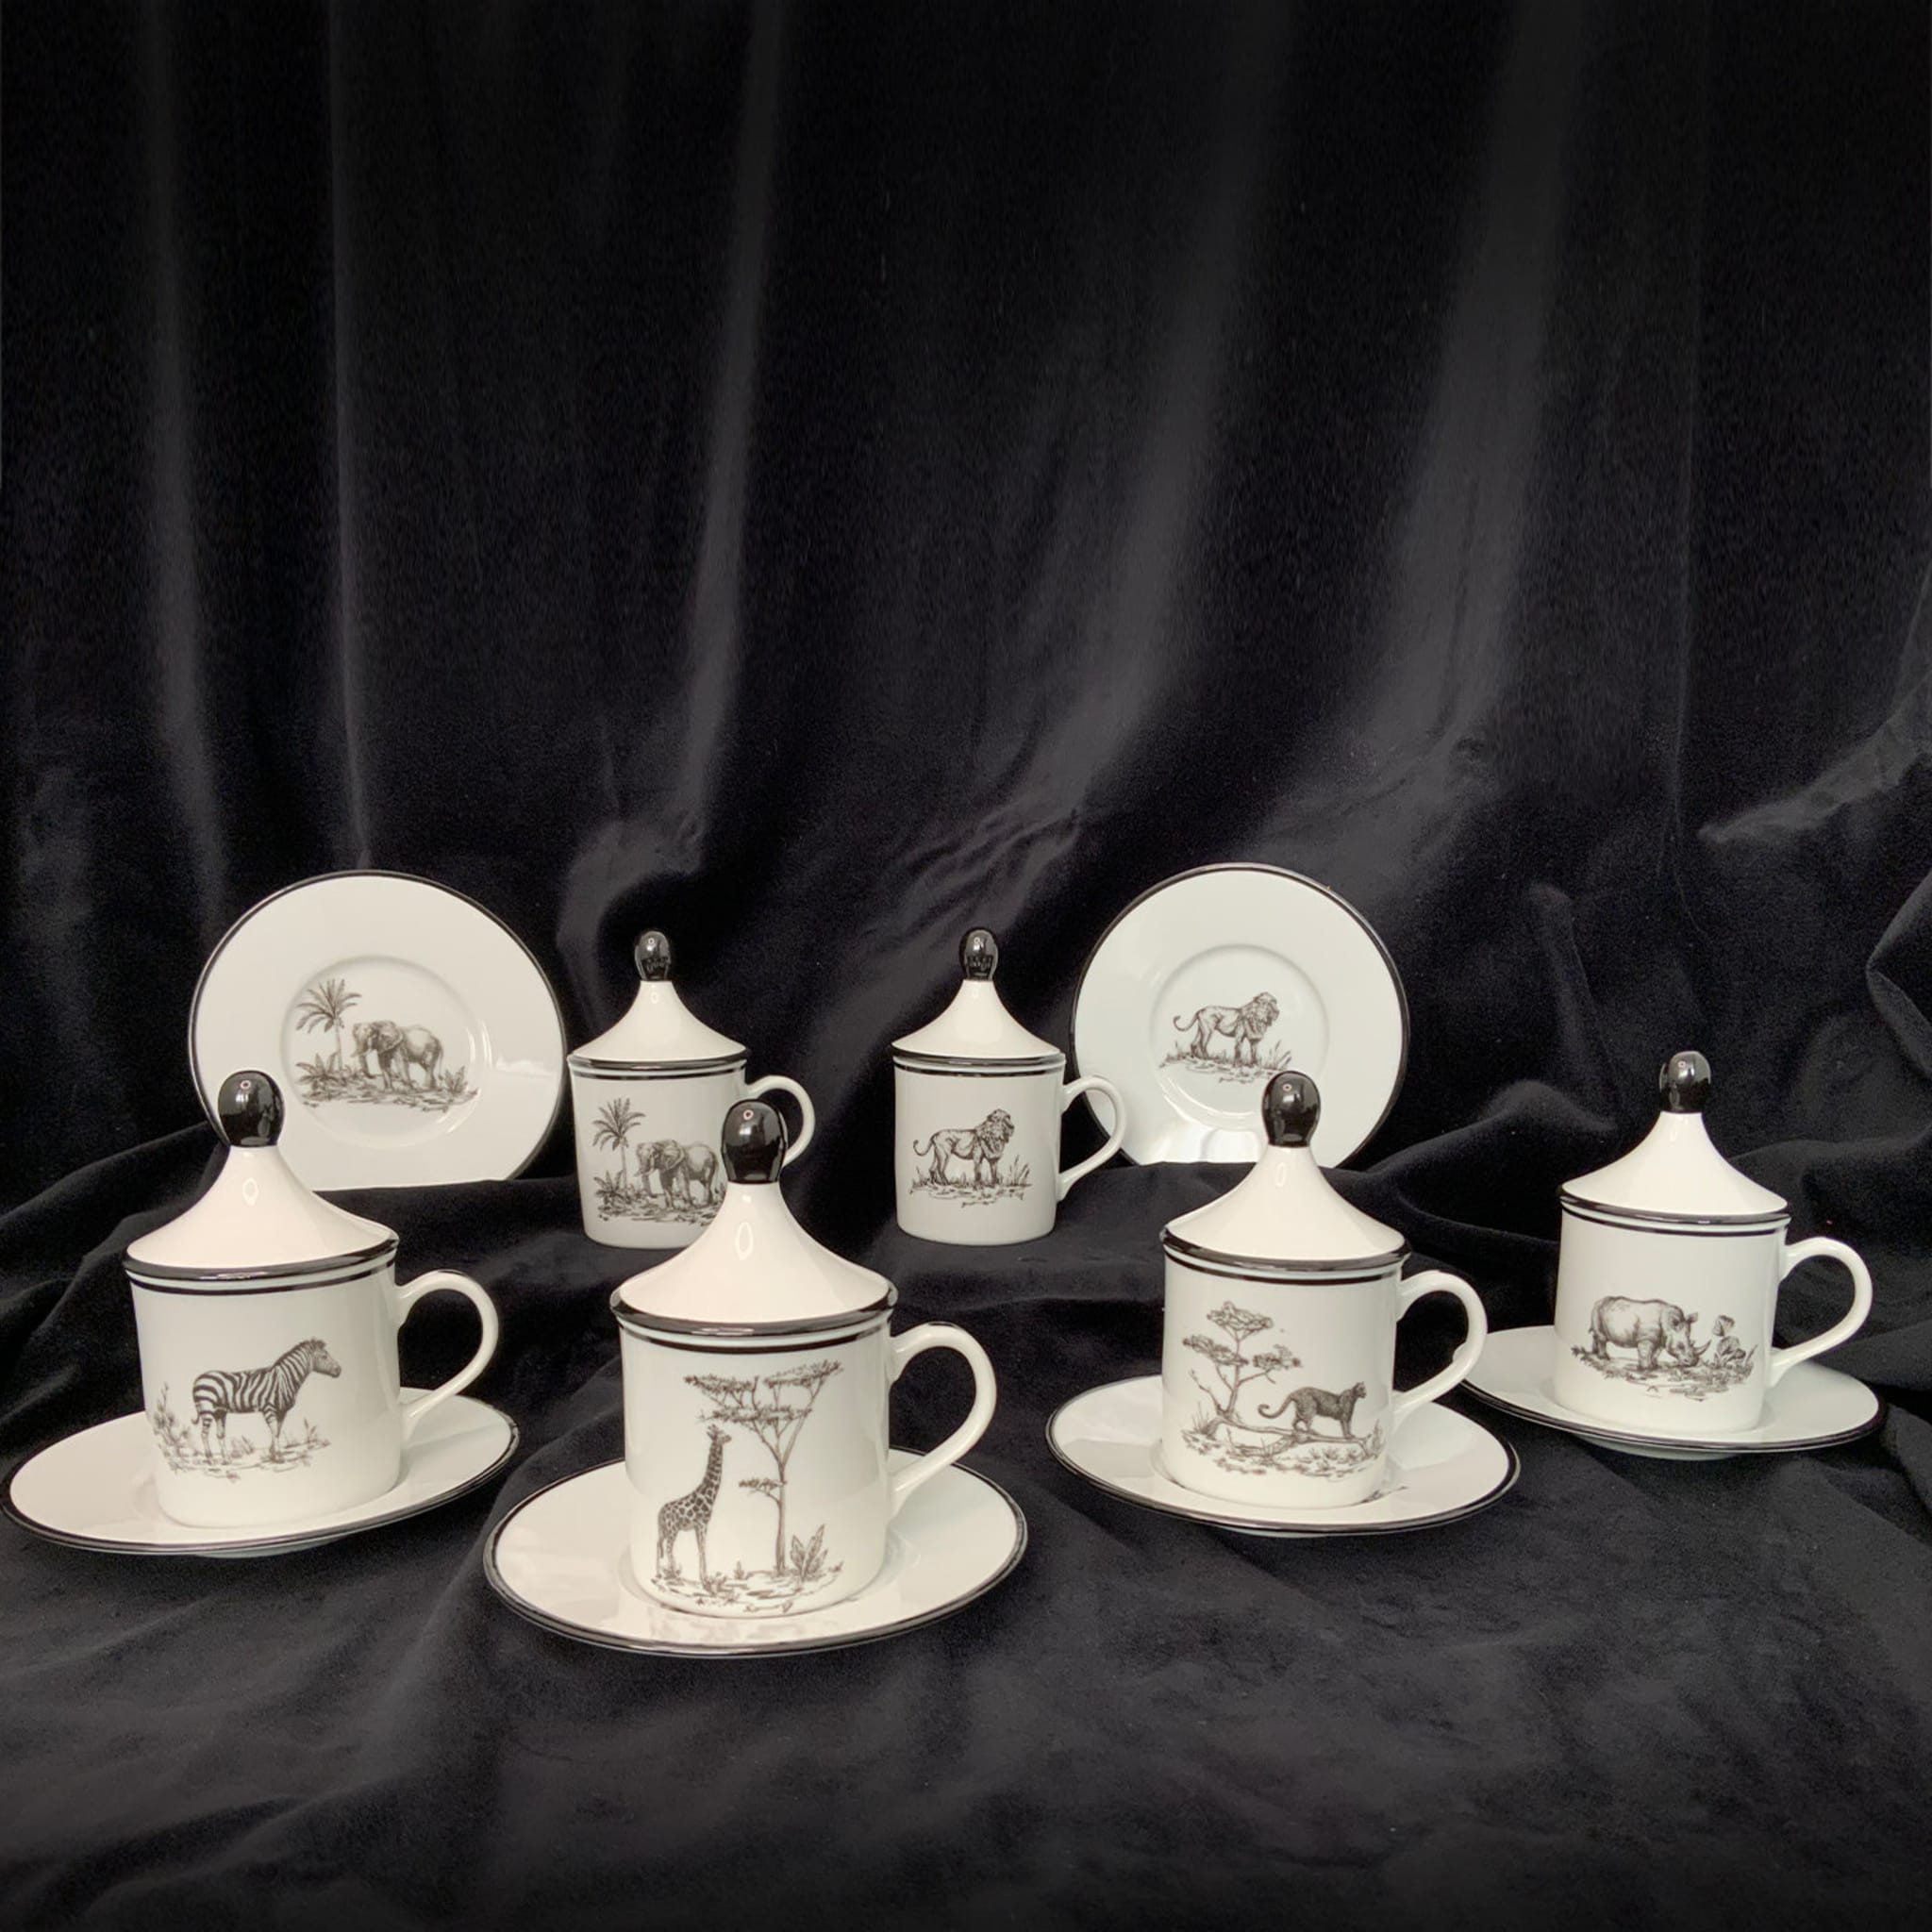 Set of 6 Savana Espresso Cups - Alternative view 4